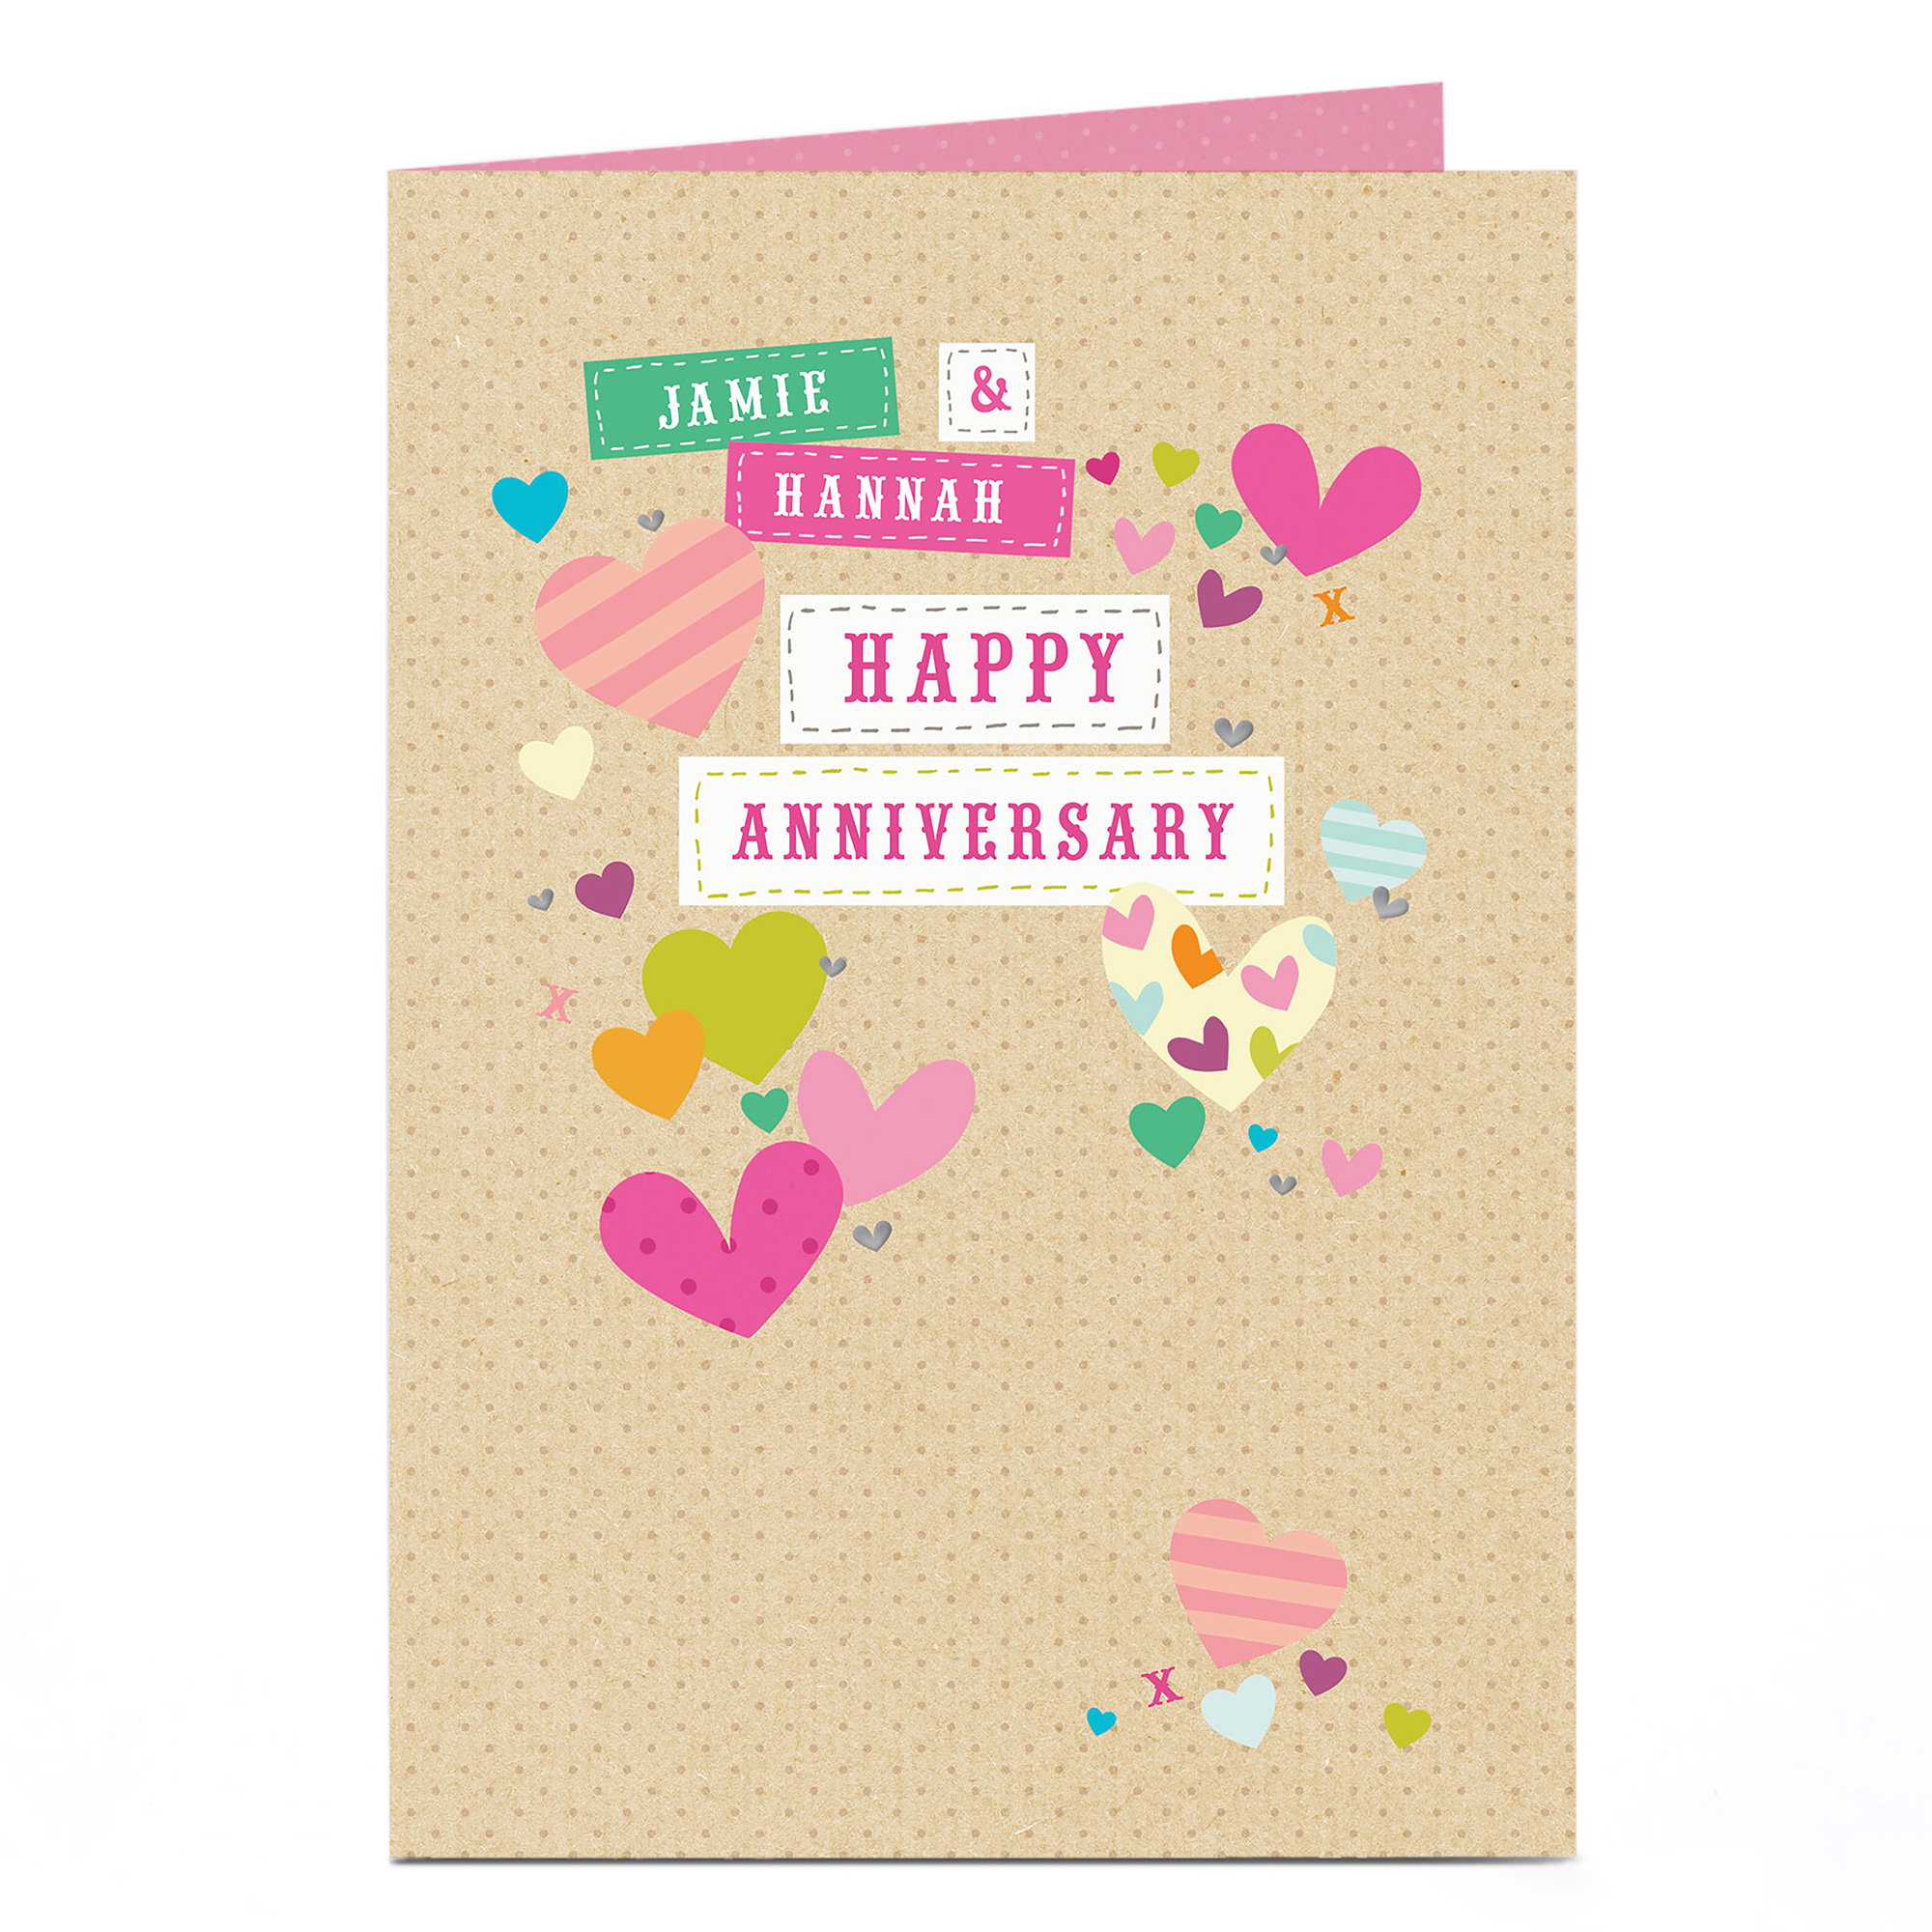 Personalised Anniversary Card - Pretty Hearts